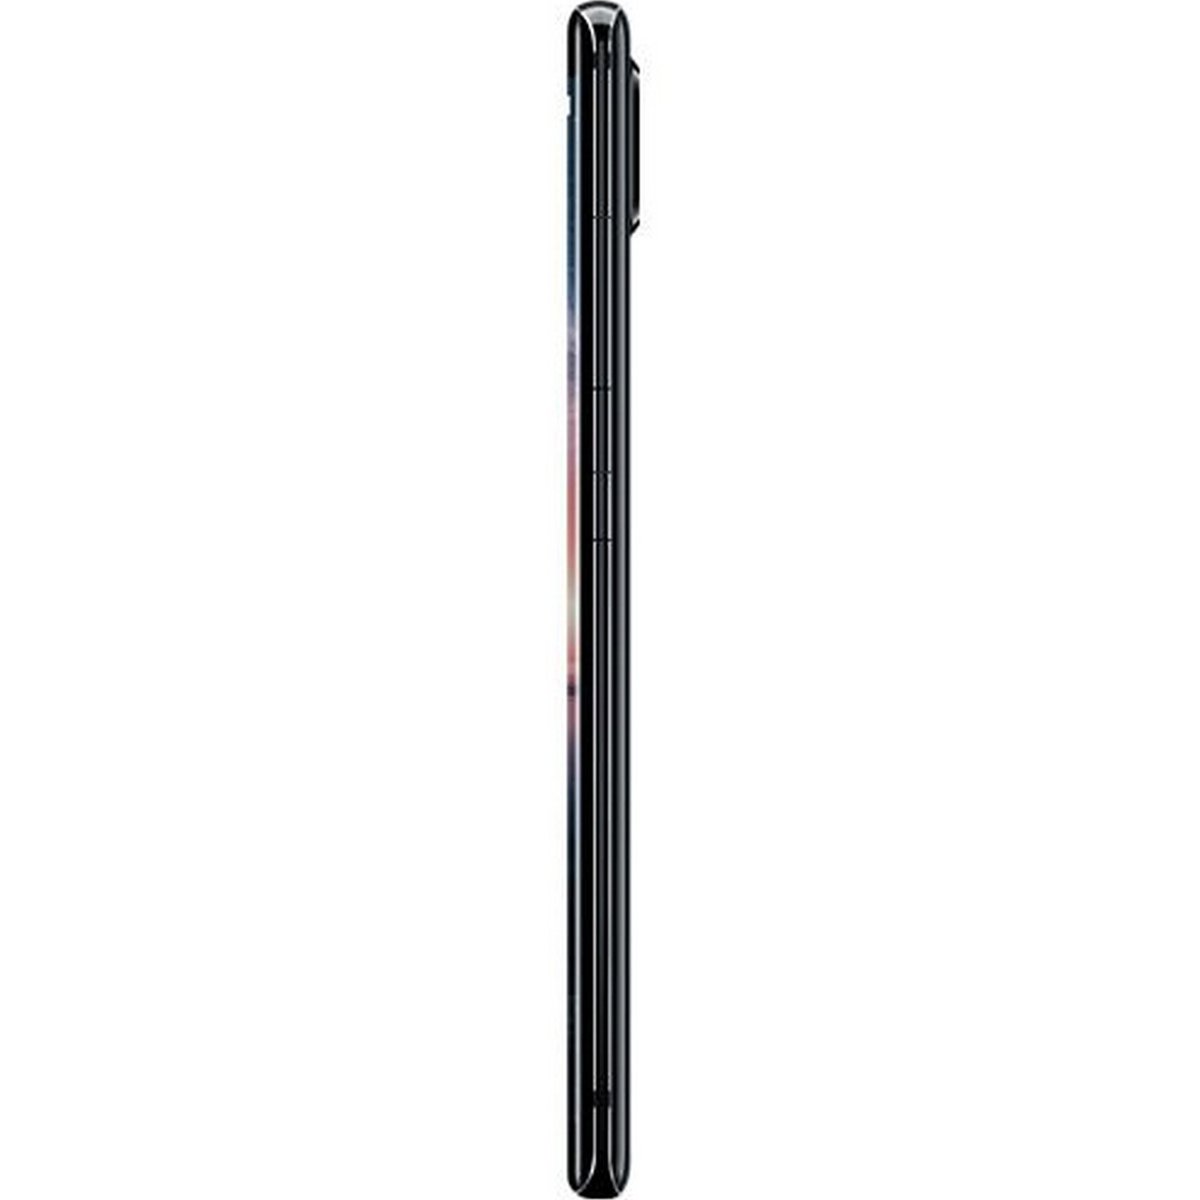 Nokia 8 Sirocco128GB Black